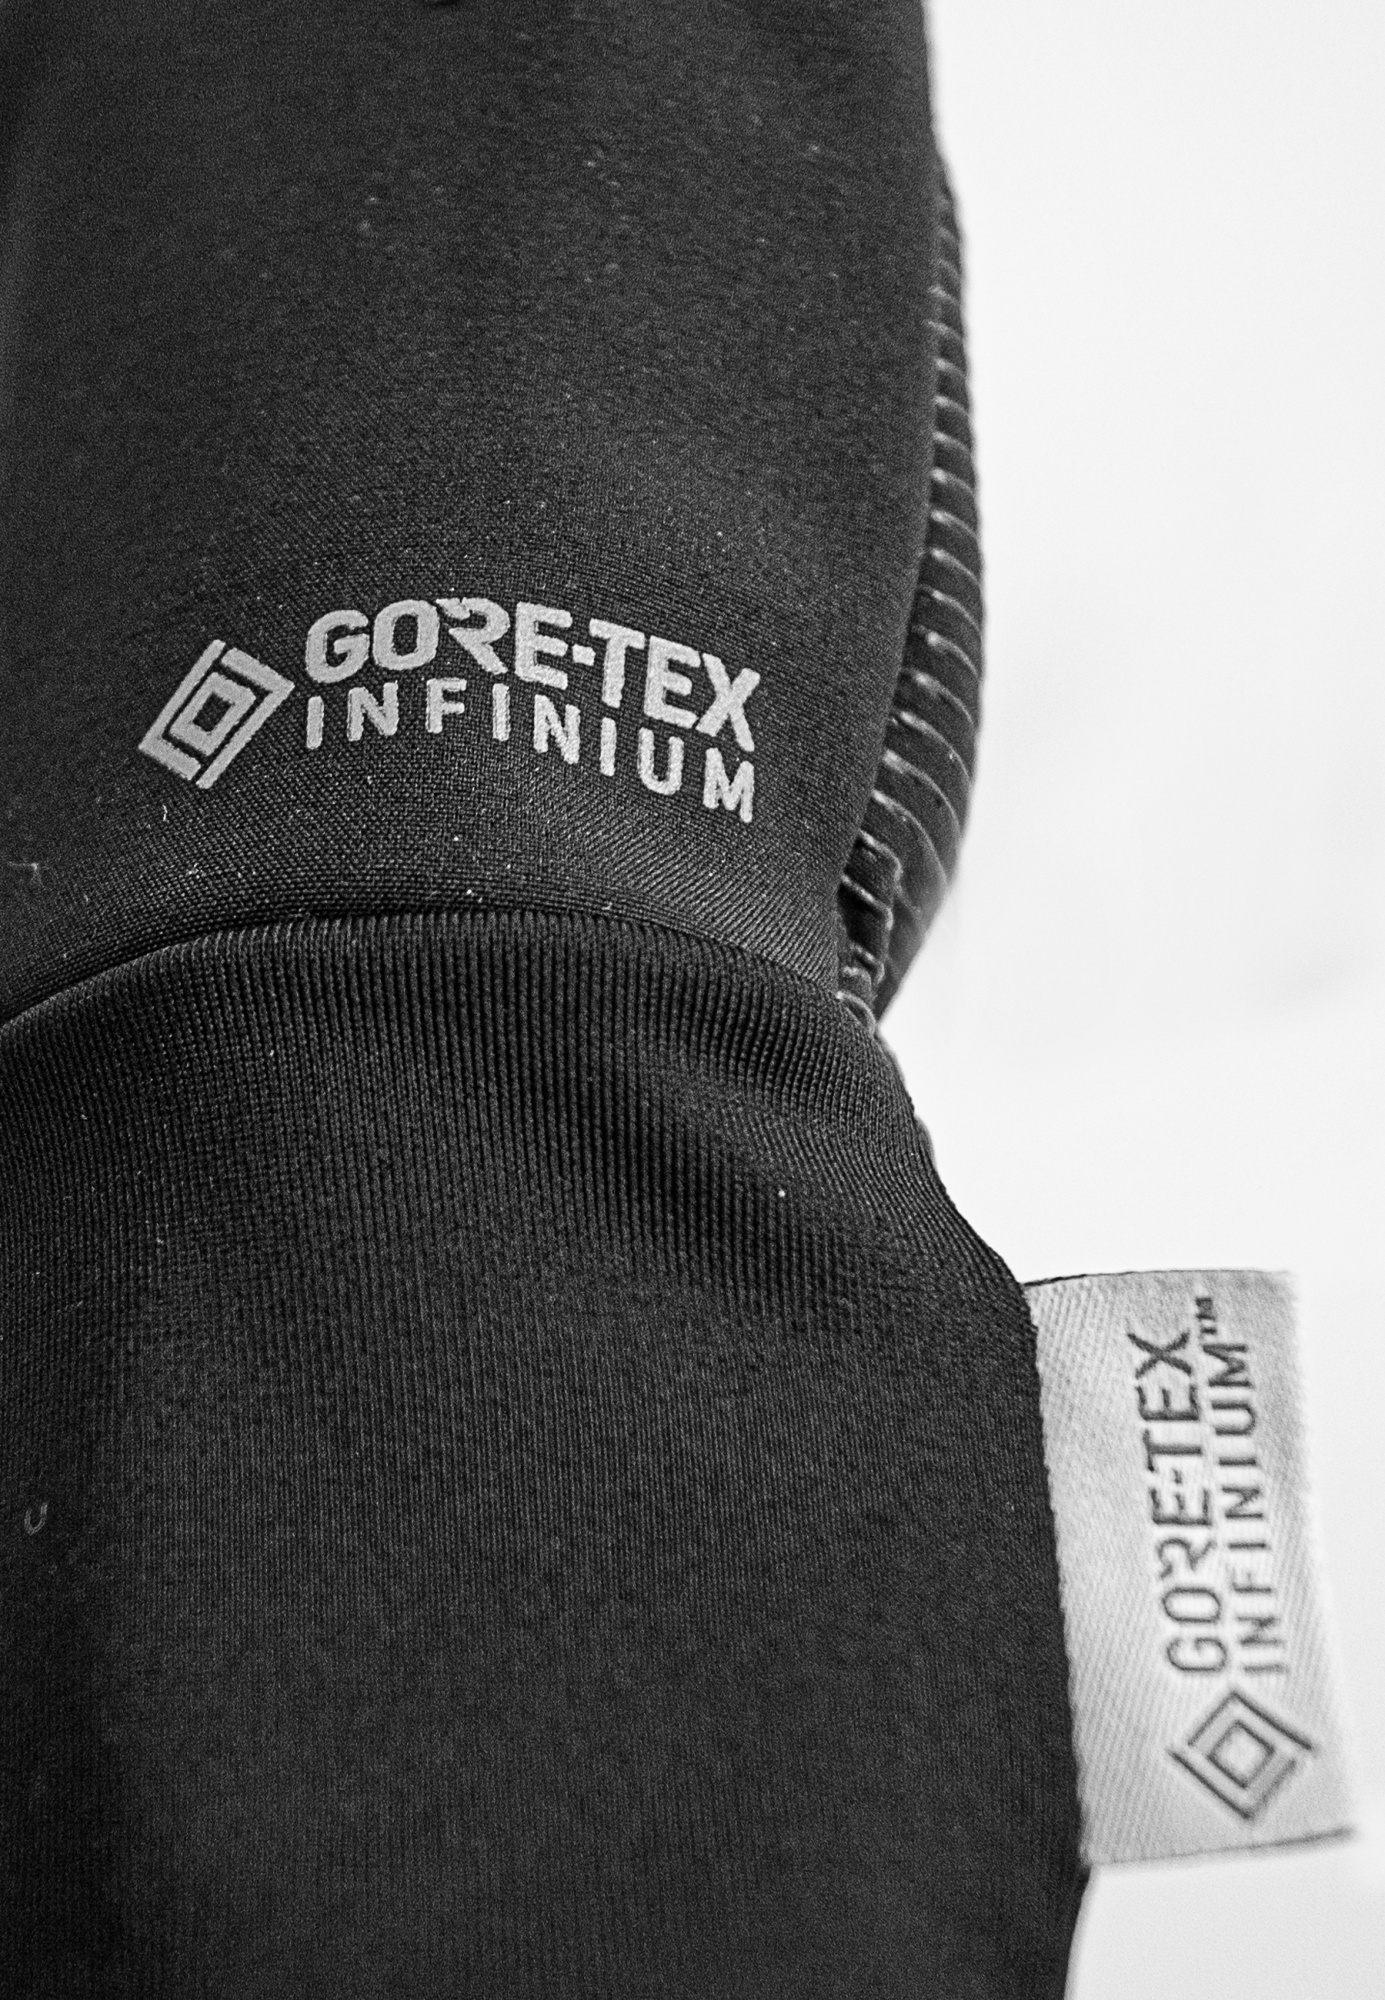 Reusch Multisport Glove GORE-TEX INFINIUM TOUCH